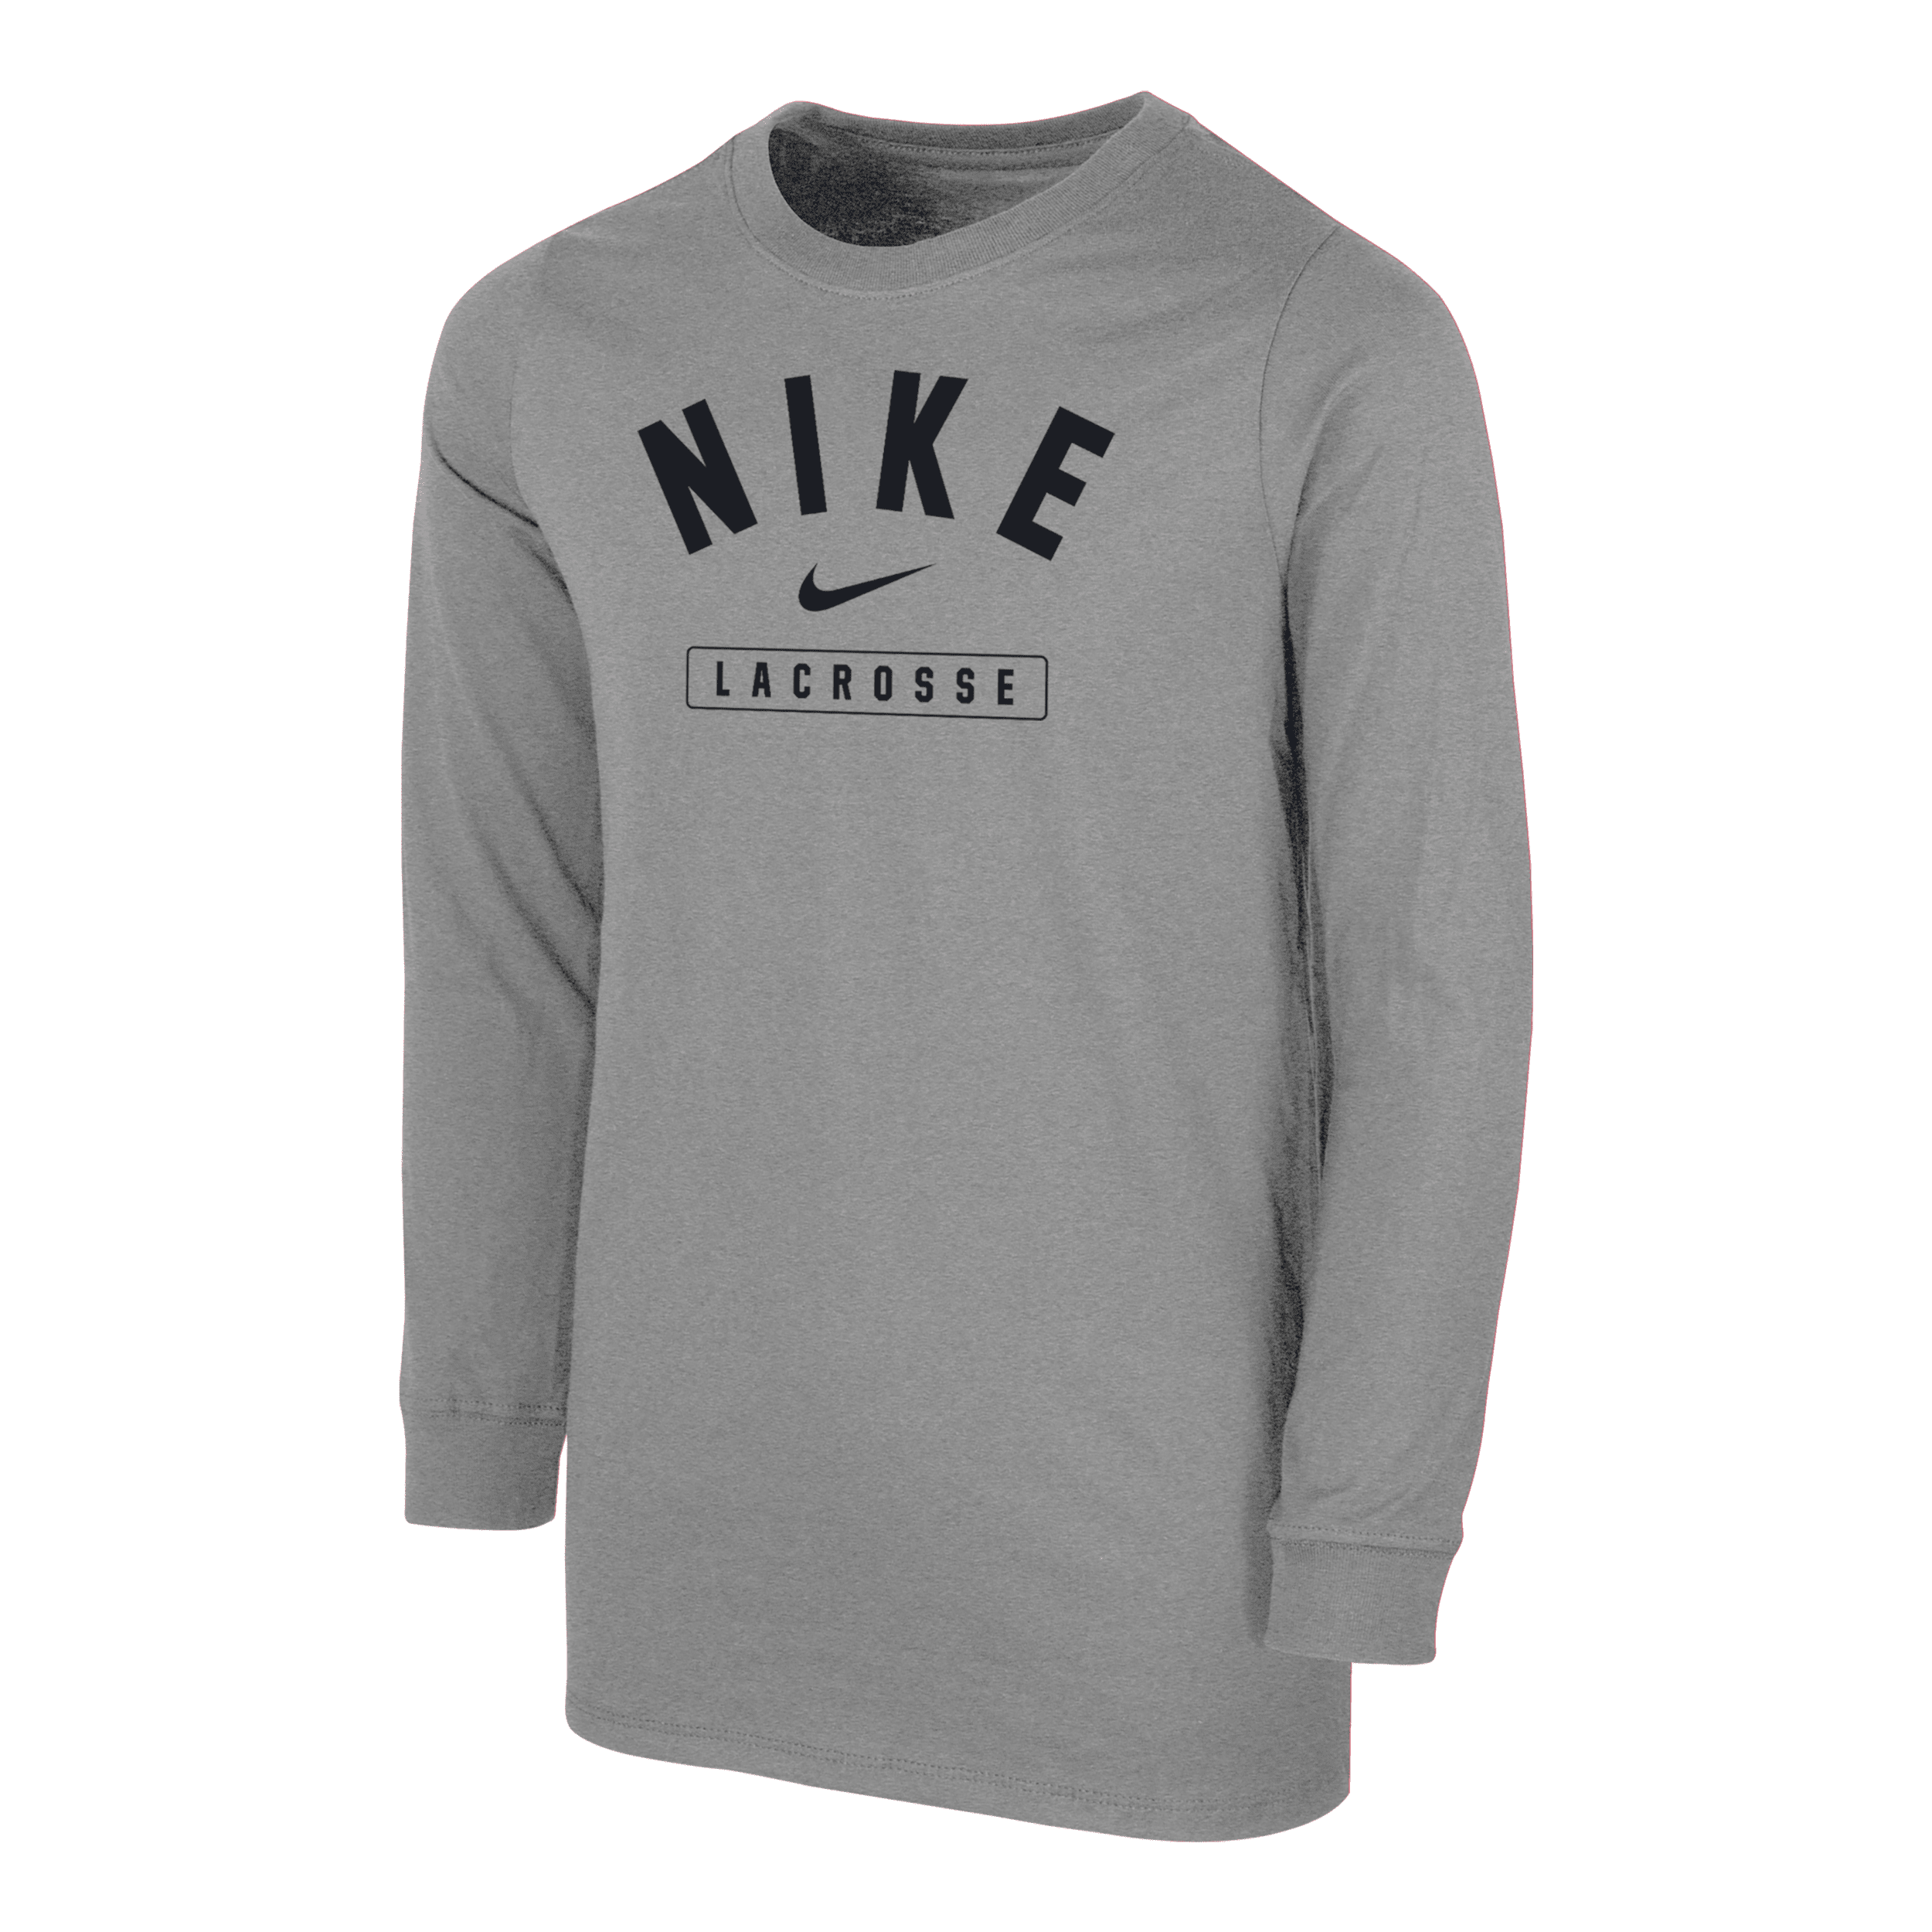 Nike Lacrosse Big Kids' (boys') Long-sleeve T-shirt In Grey